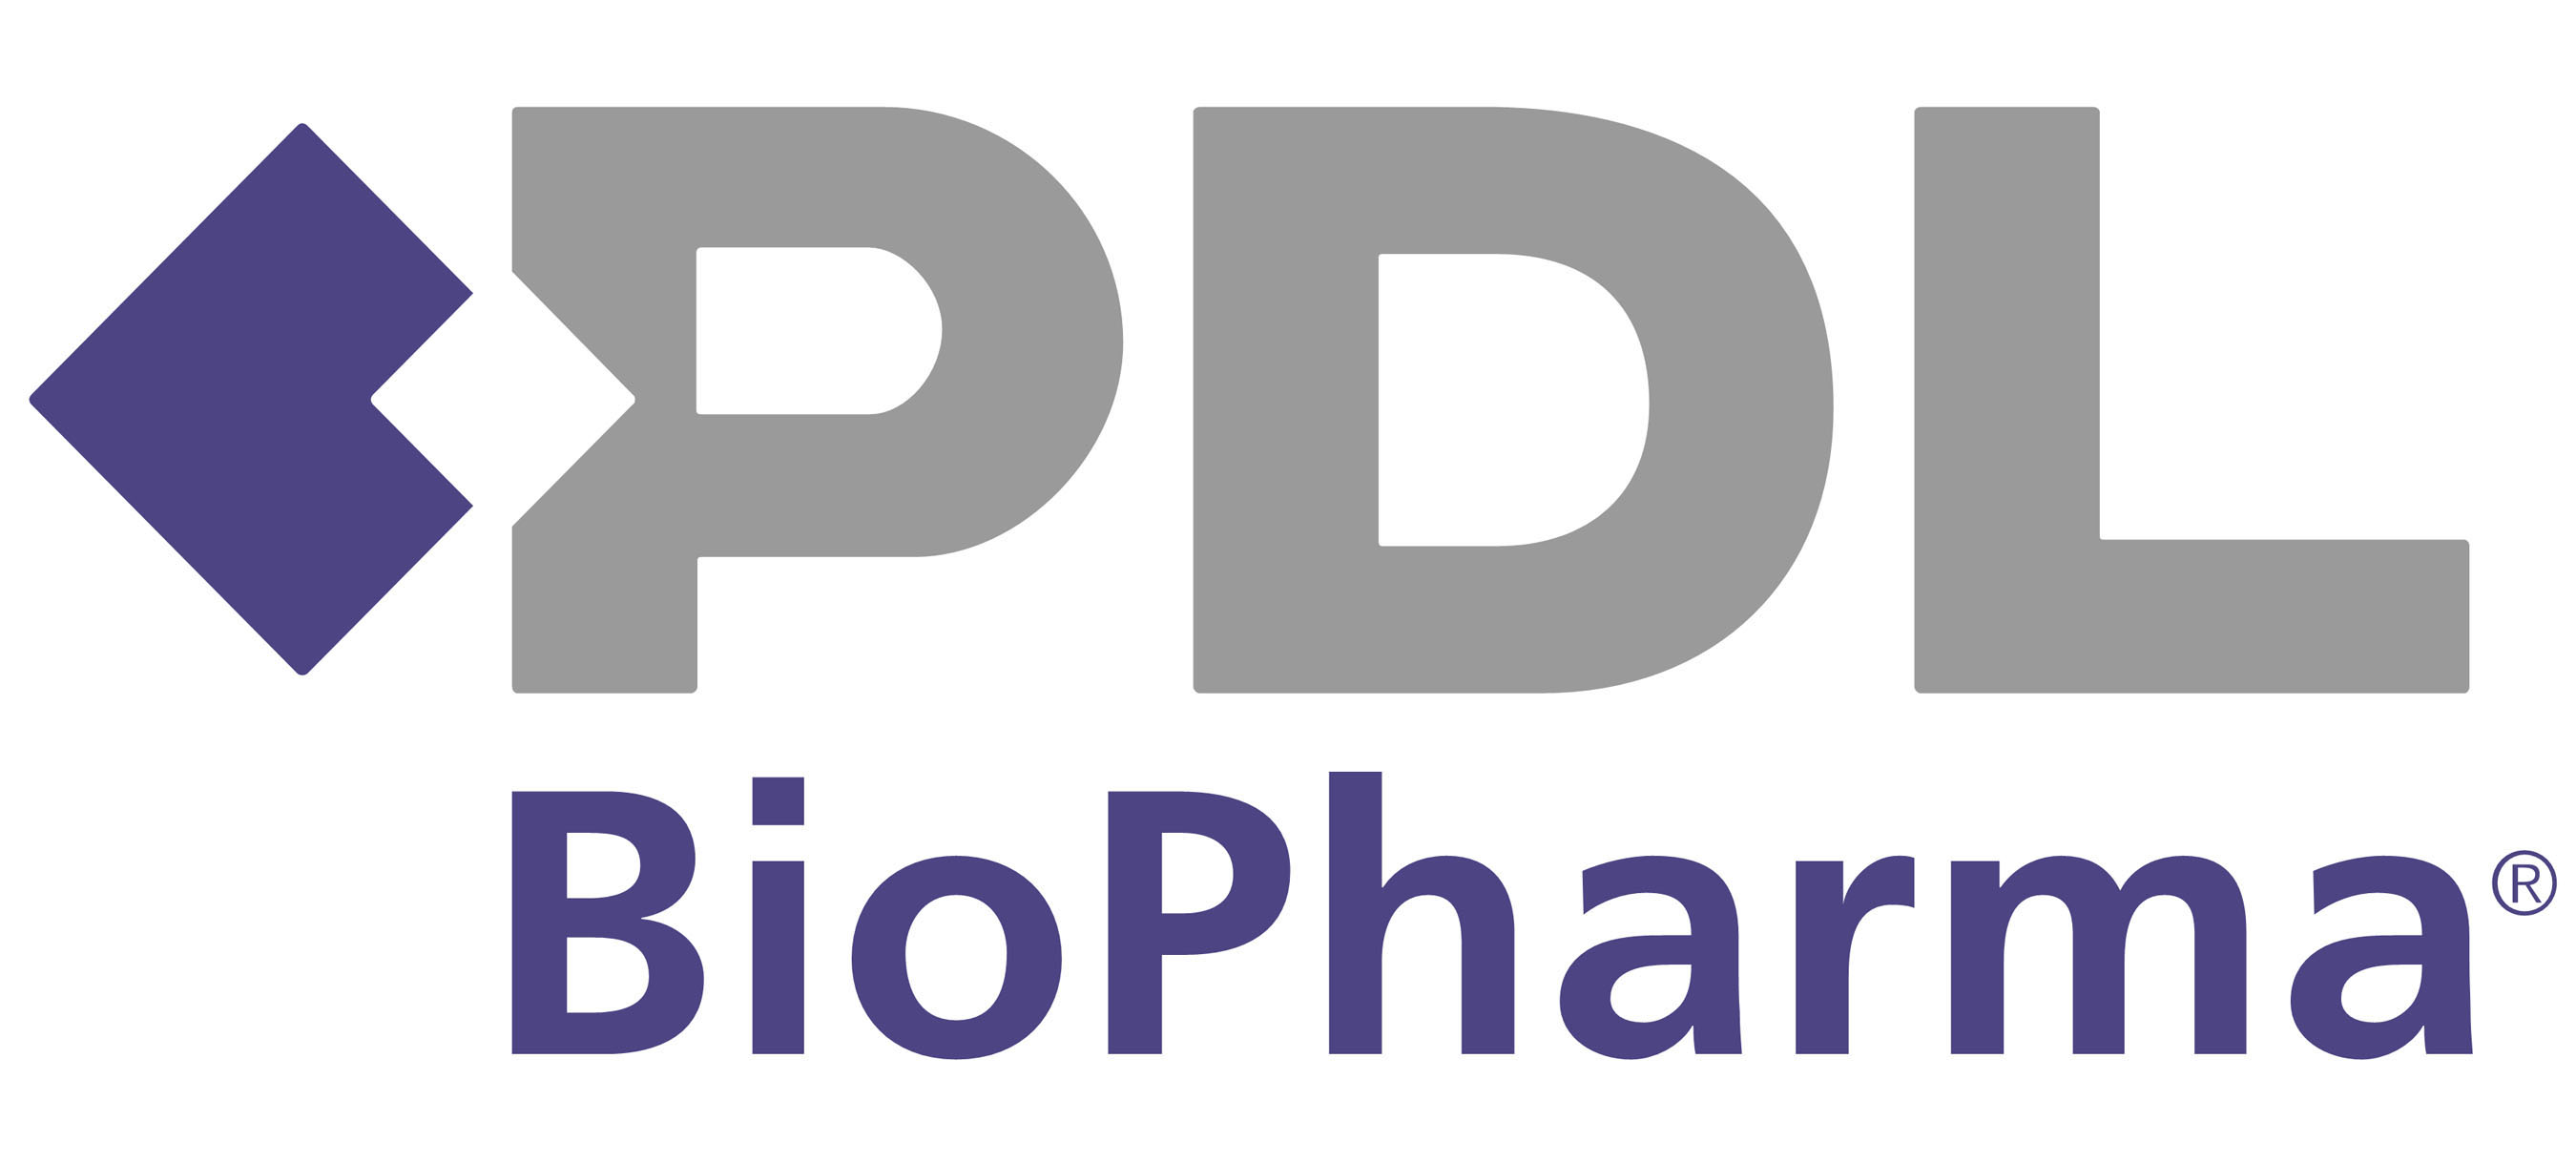 PDL BioPharma, Inc. (PRNewsFoto/PDL BioPharma, Inc.)